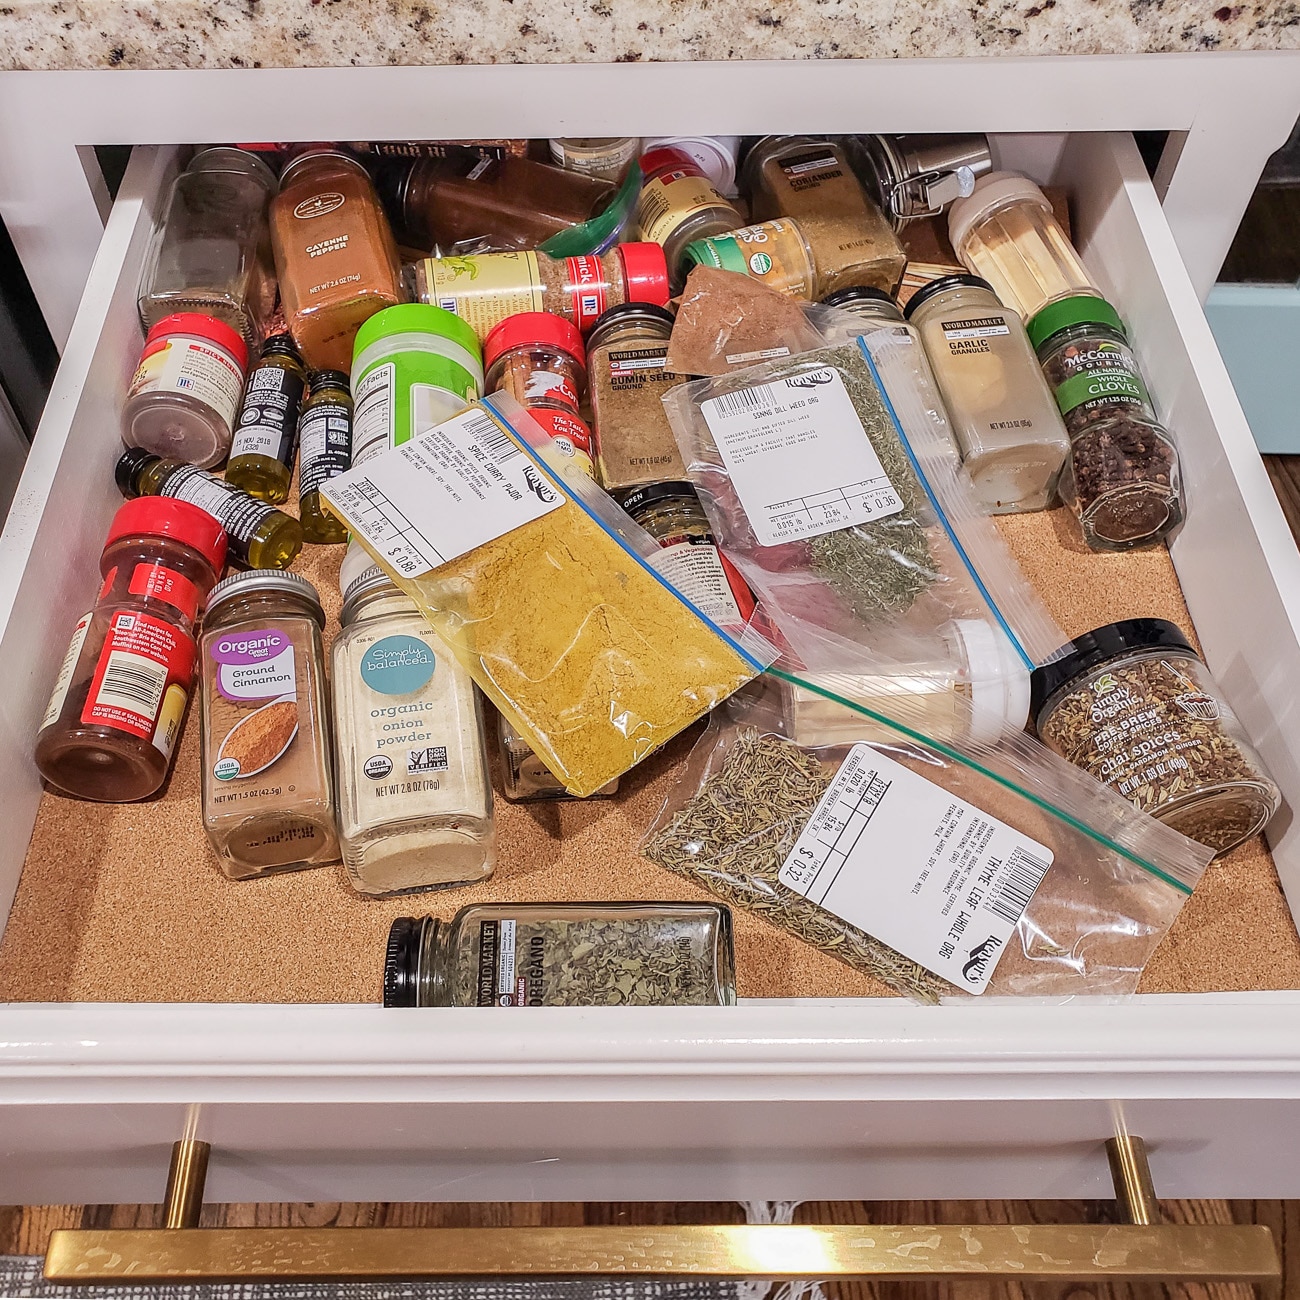 https://www.polishedhabitat.com/wp-content/uploads/2019/03/How-to-Organize-Spices.jpg